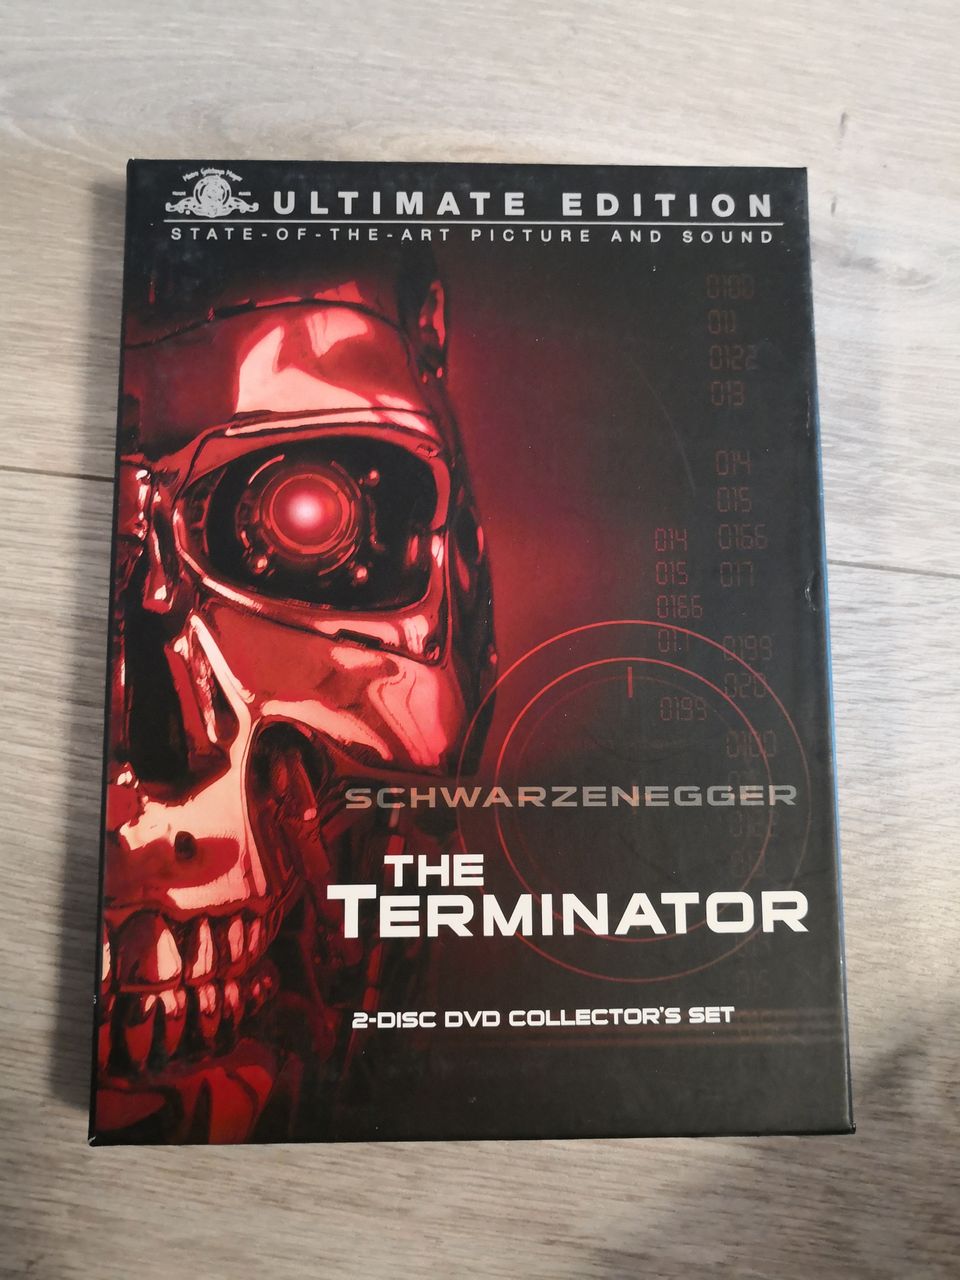 The Terminator 2-disc DVD collector's set